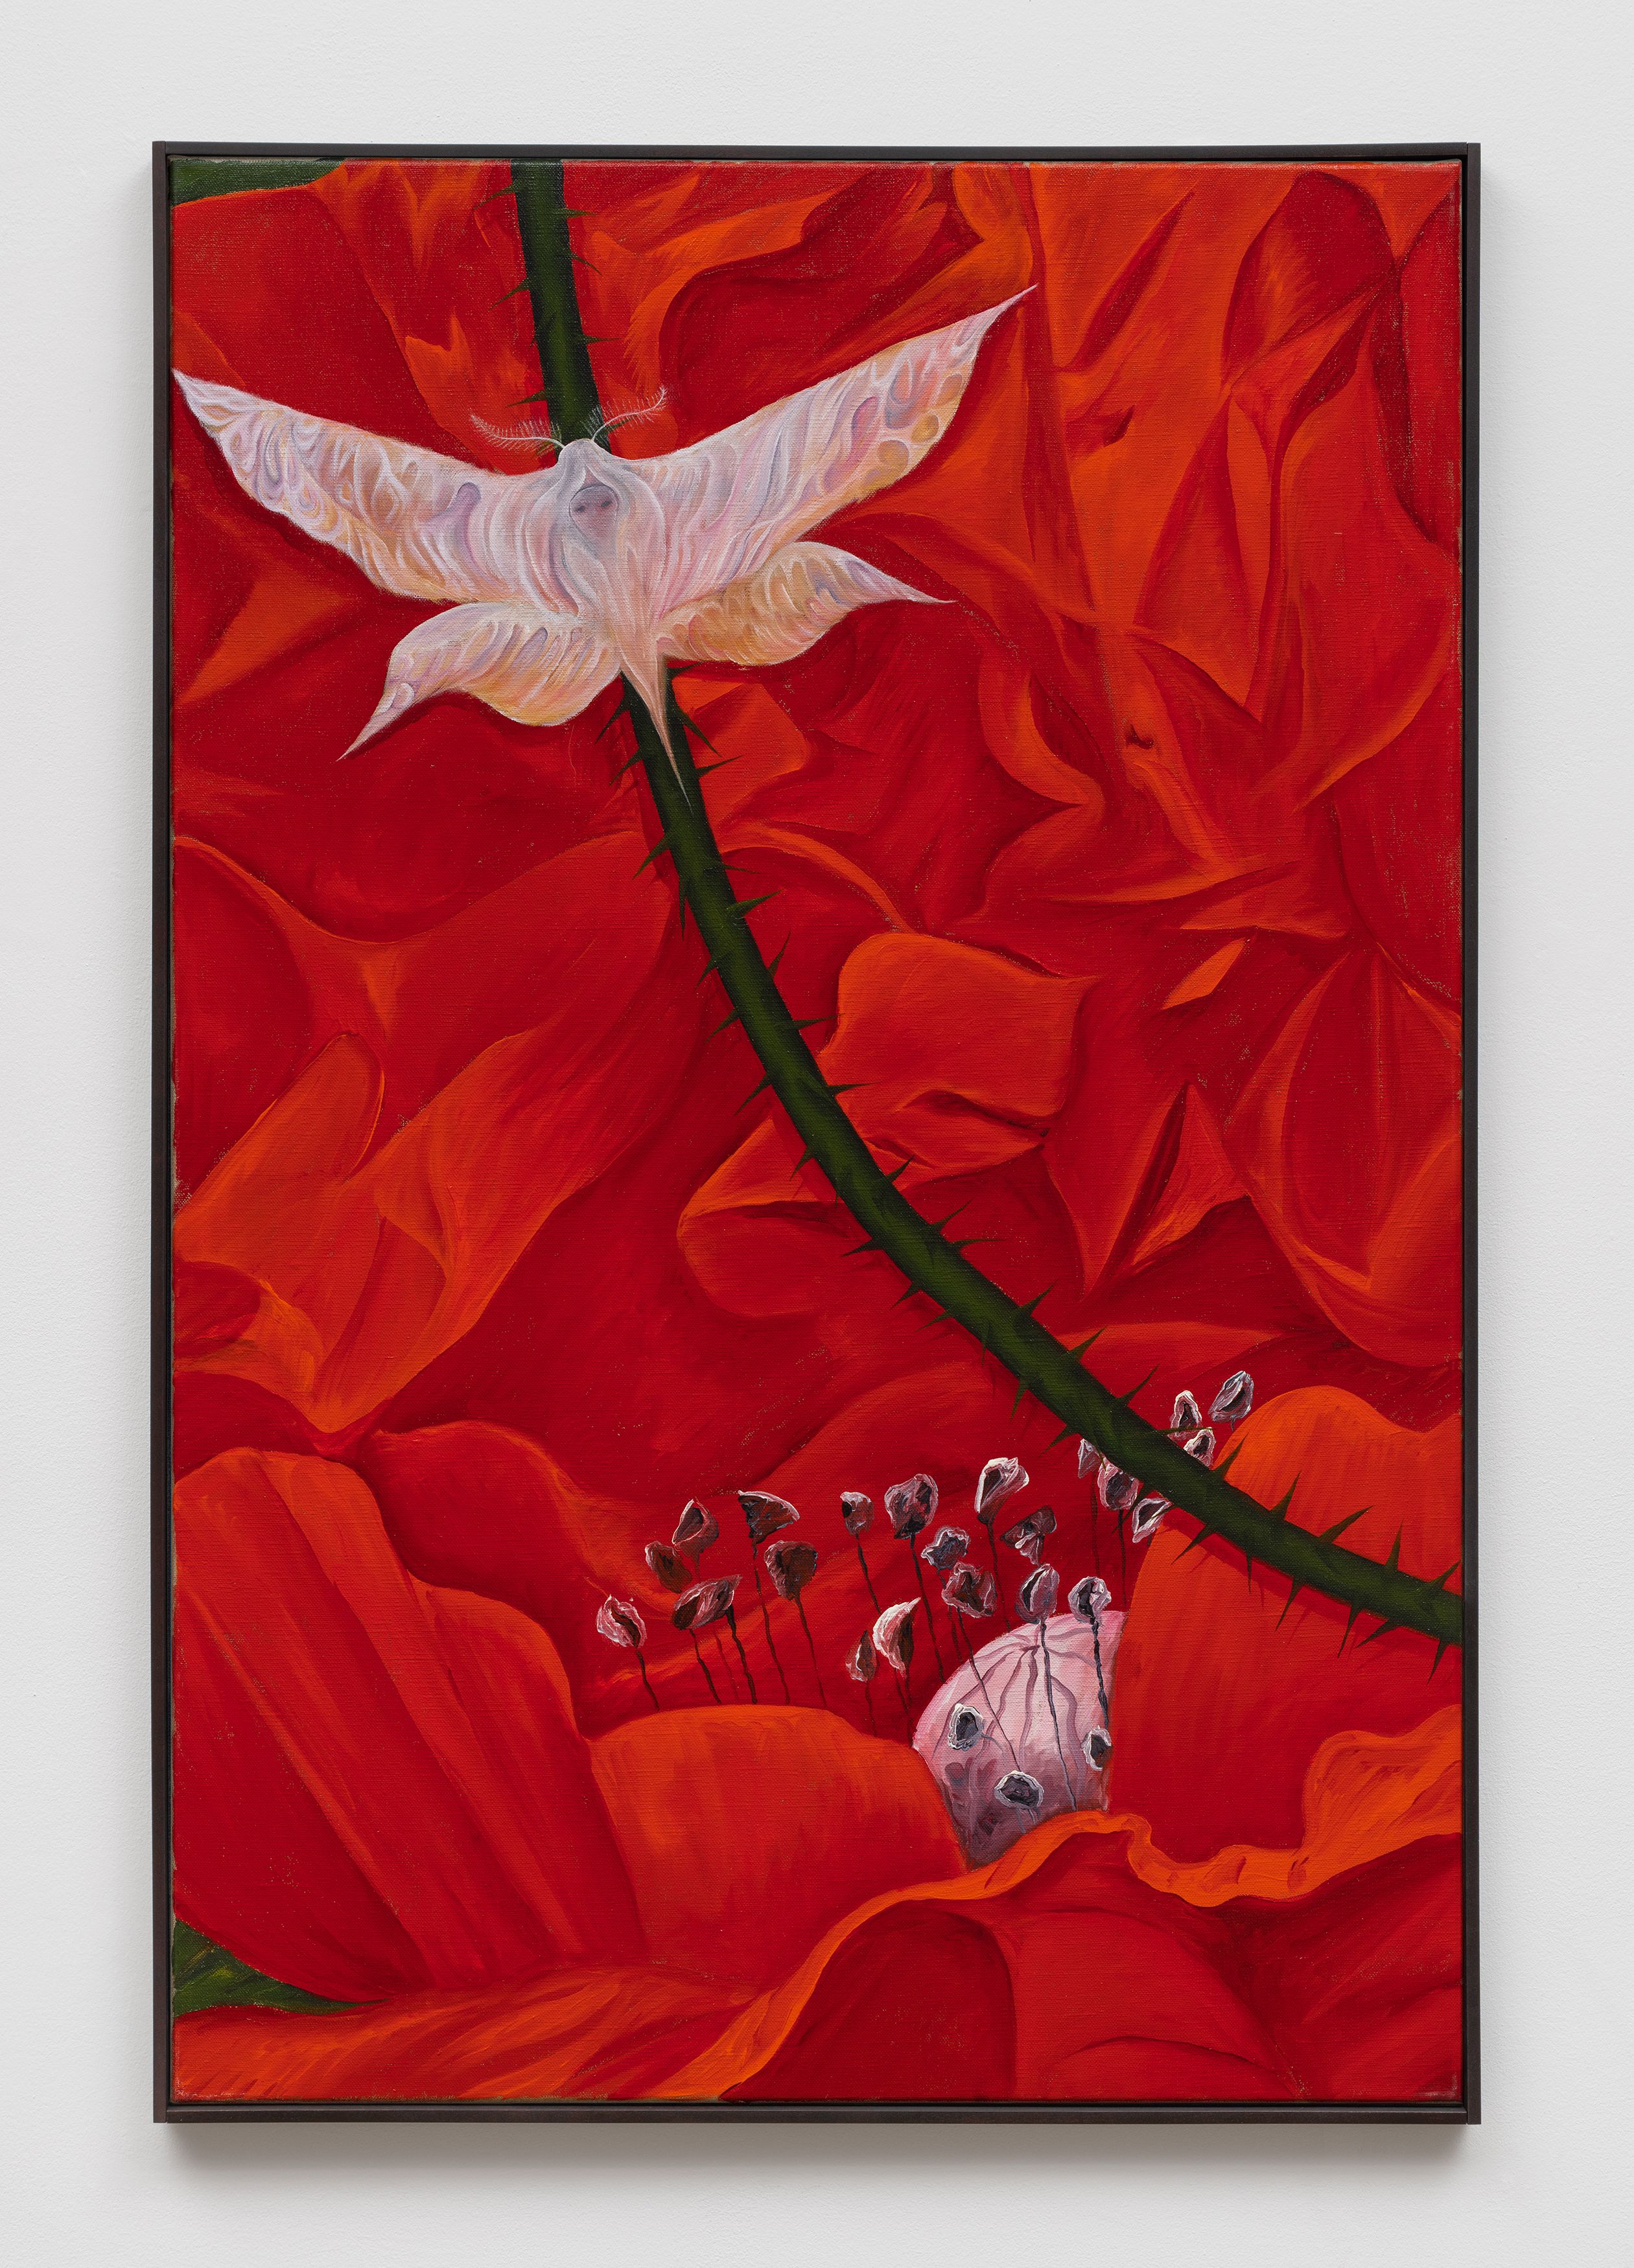 Srijon Chowdhury, Moth on a Poppy, 2021, oil on linen, 36 x 24 in. (91.44 x 60.96 cm)